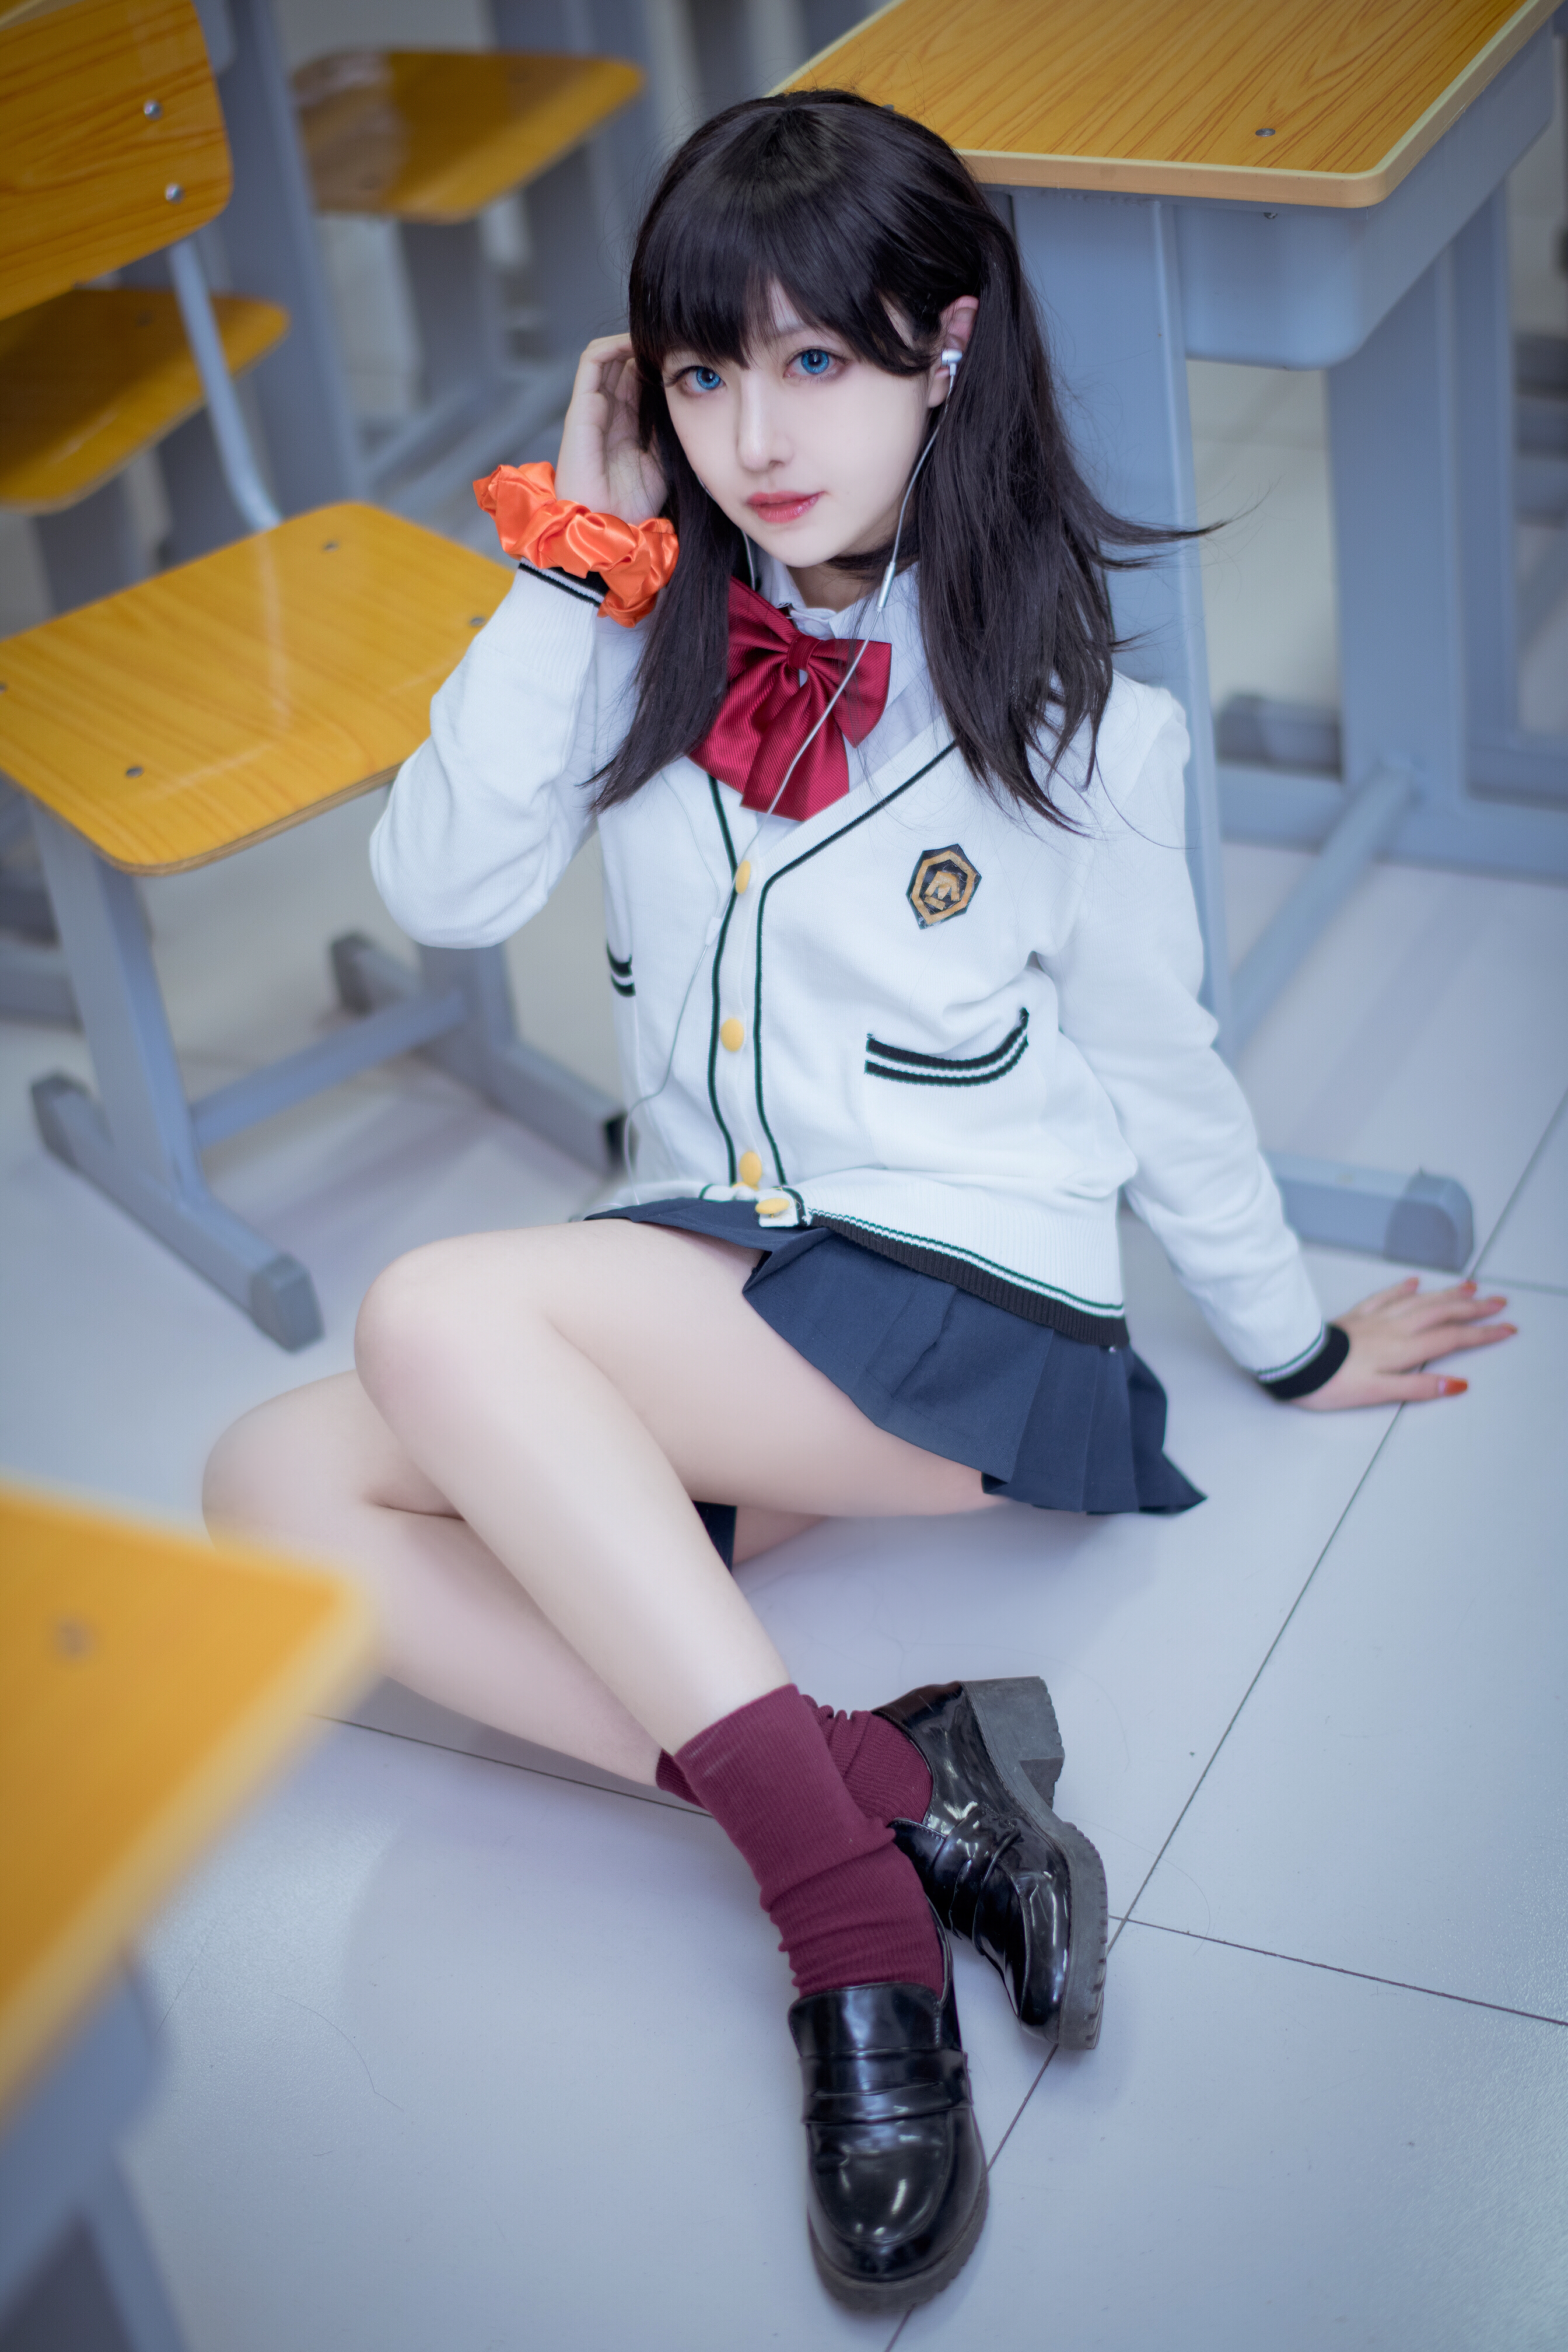 JK Black Hair Blue Eyes Bow Tie School Uniform Asian Schoolgirl Shika XiaoLu 2688x4032